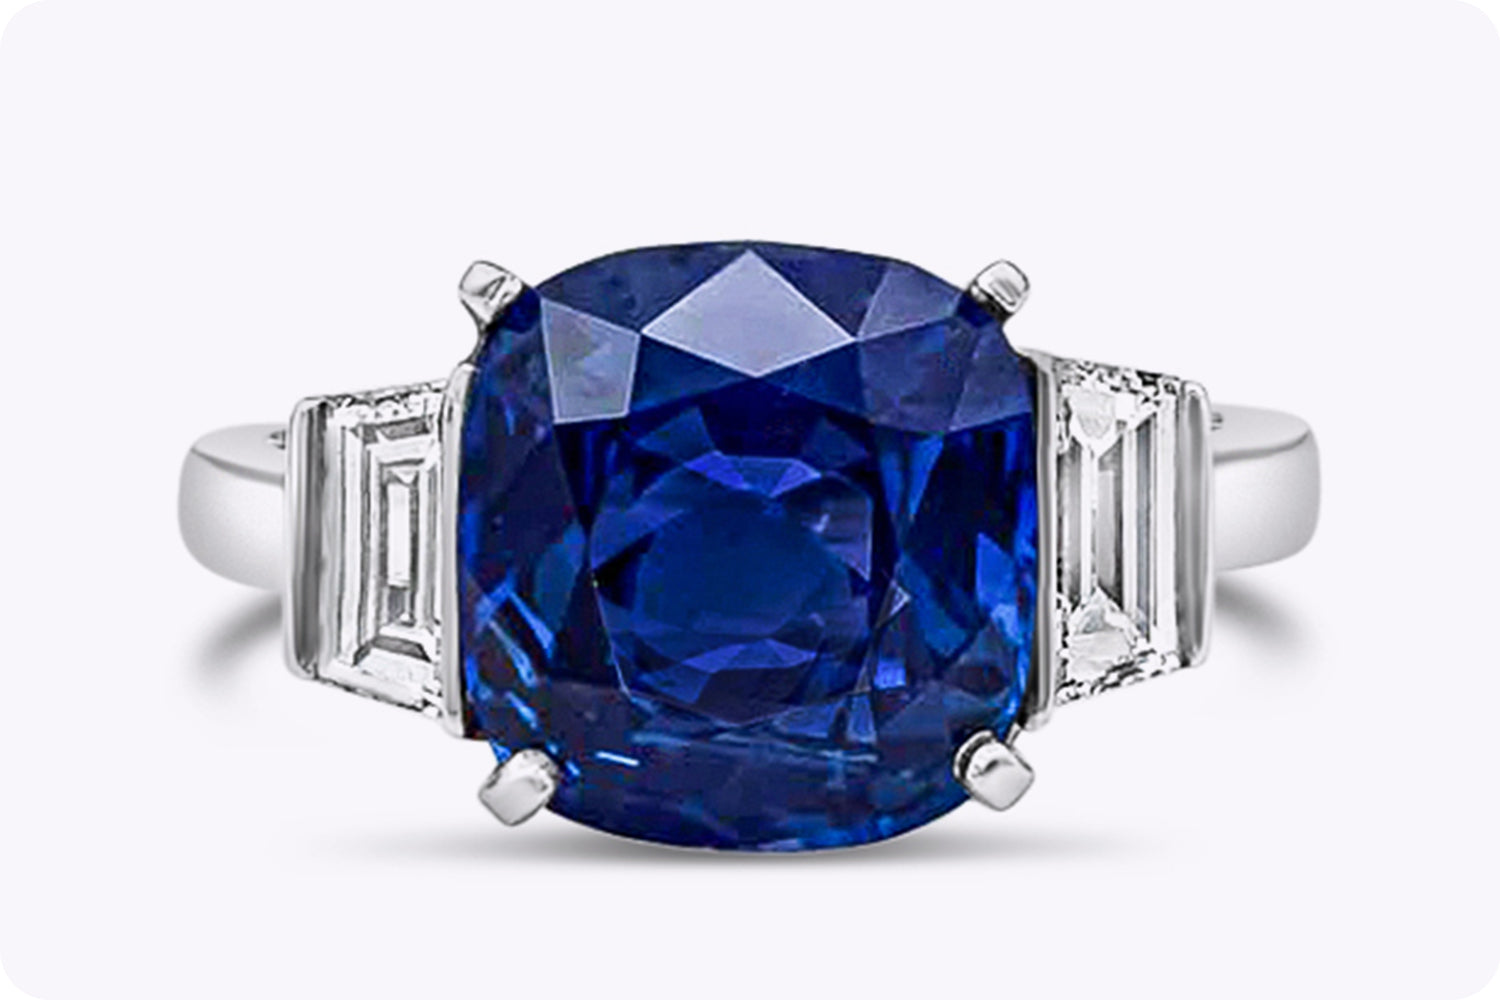 Cartier aquamarine and diamond ring.